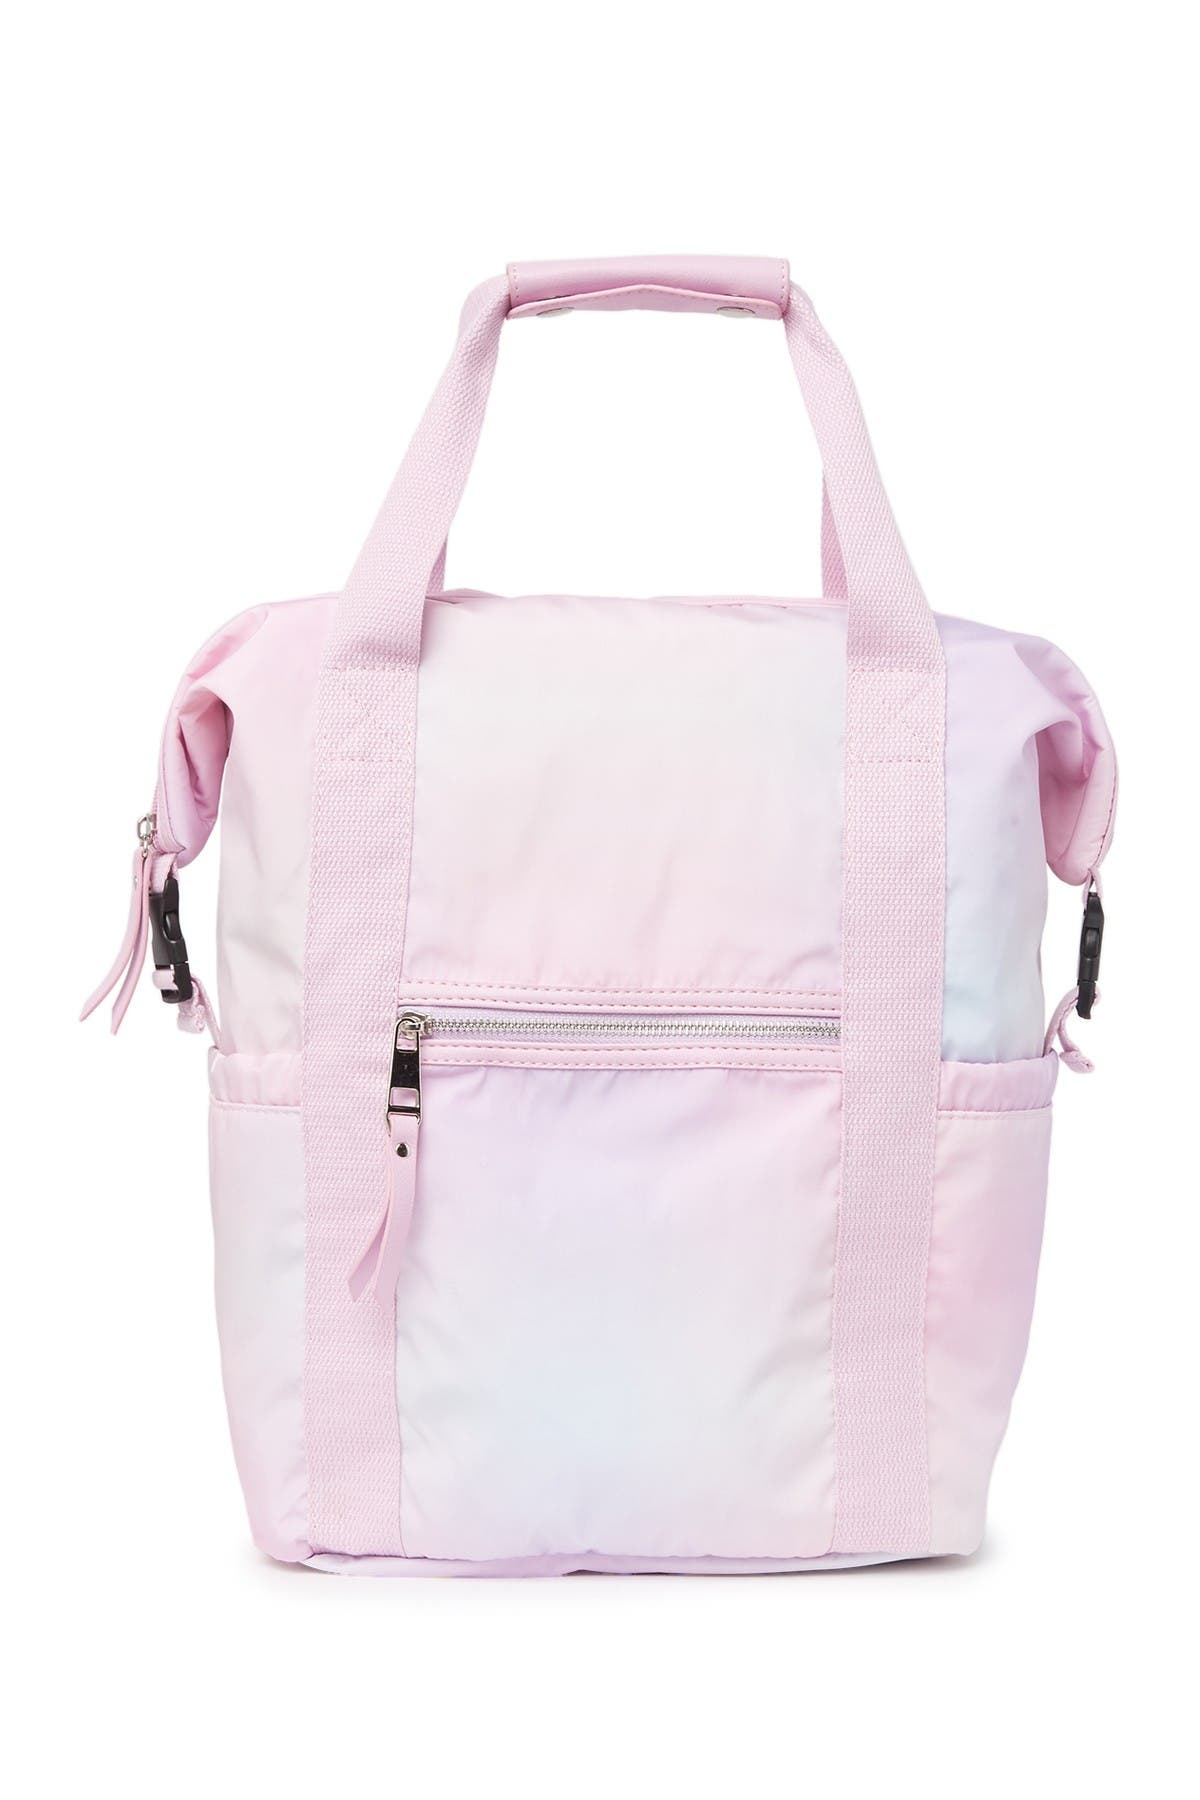 Madden Girl Booker School Backpack In Light/pastel Grey3